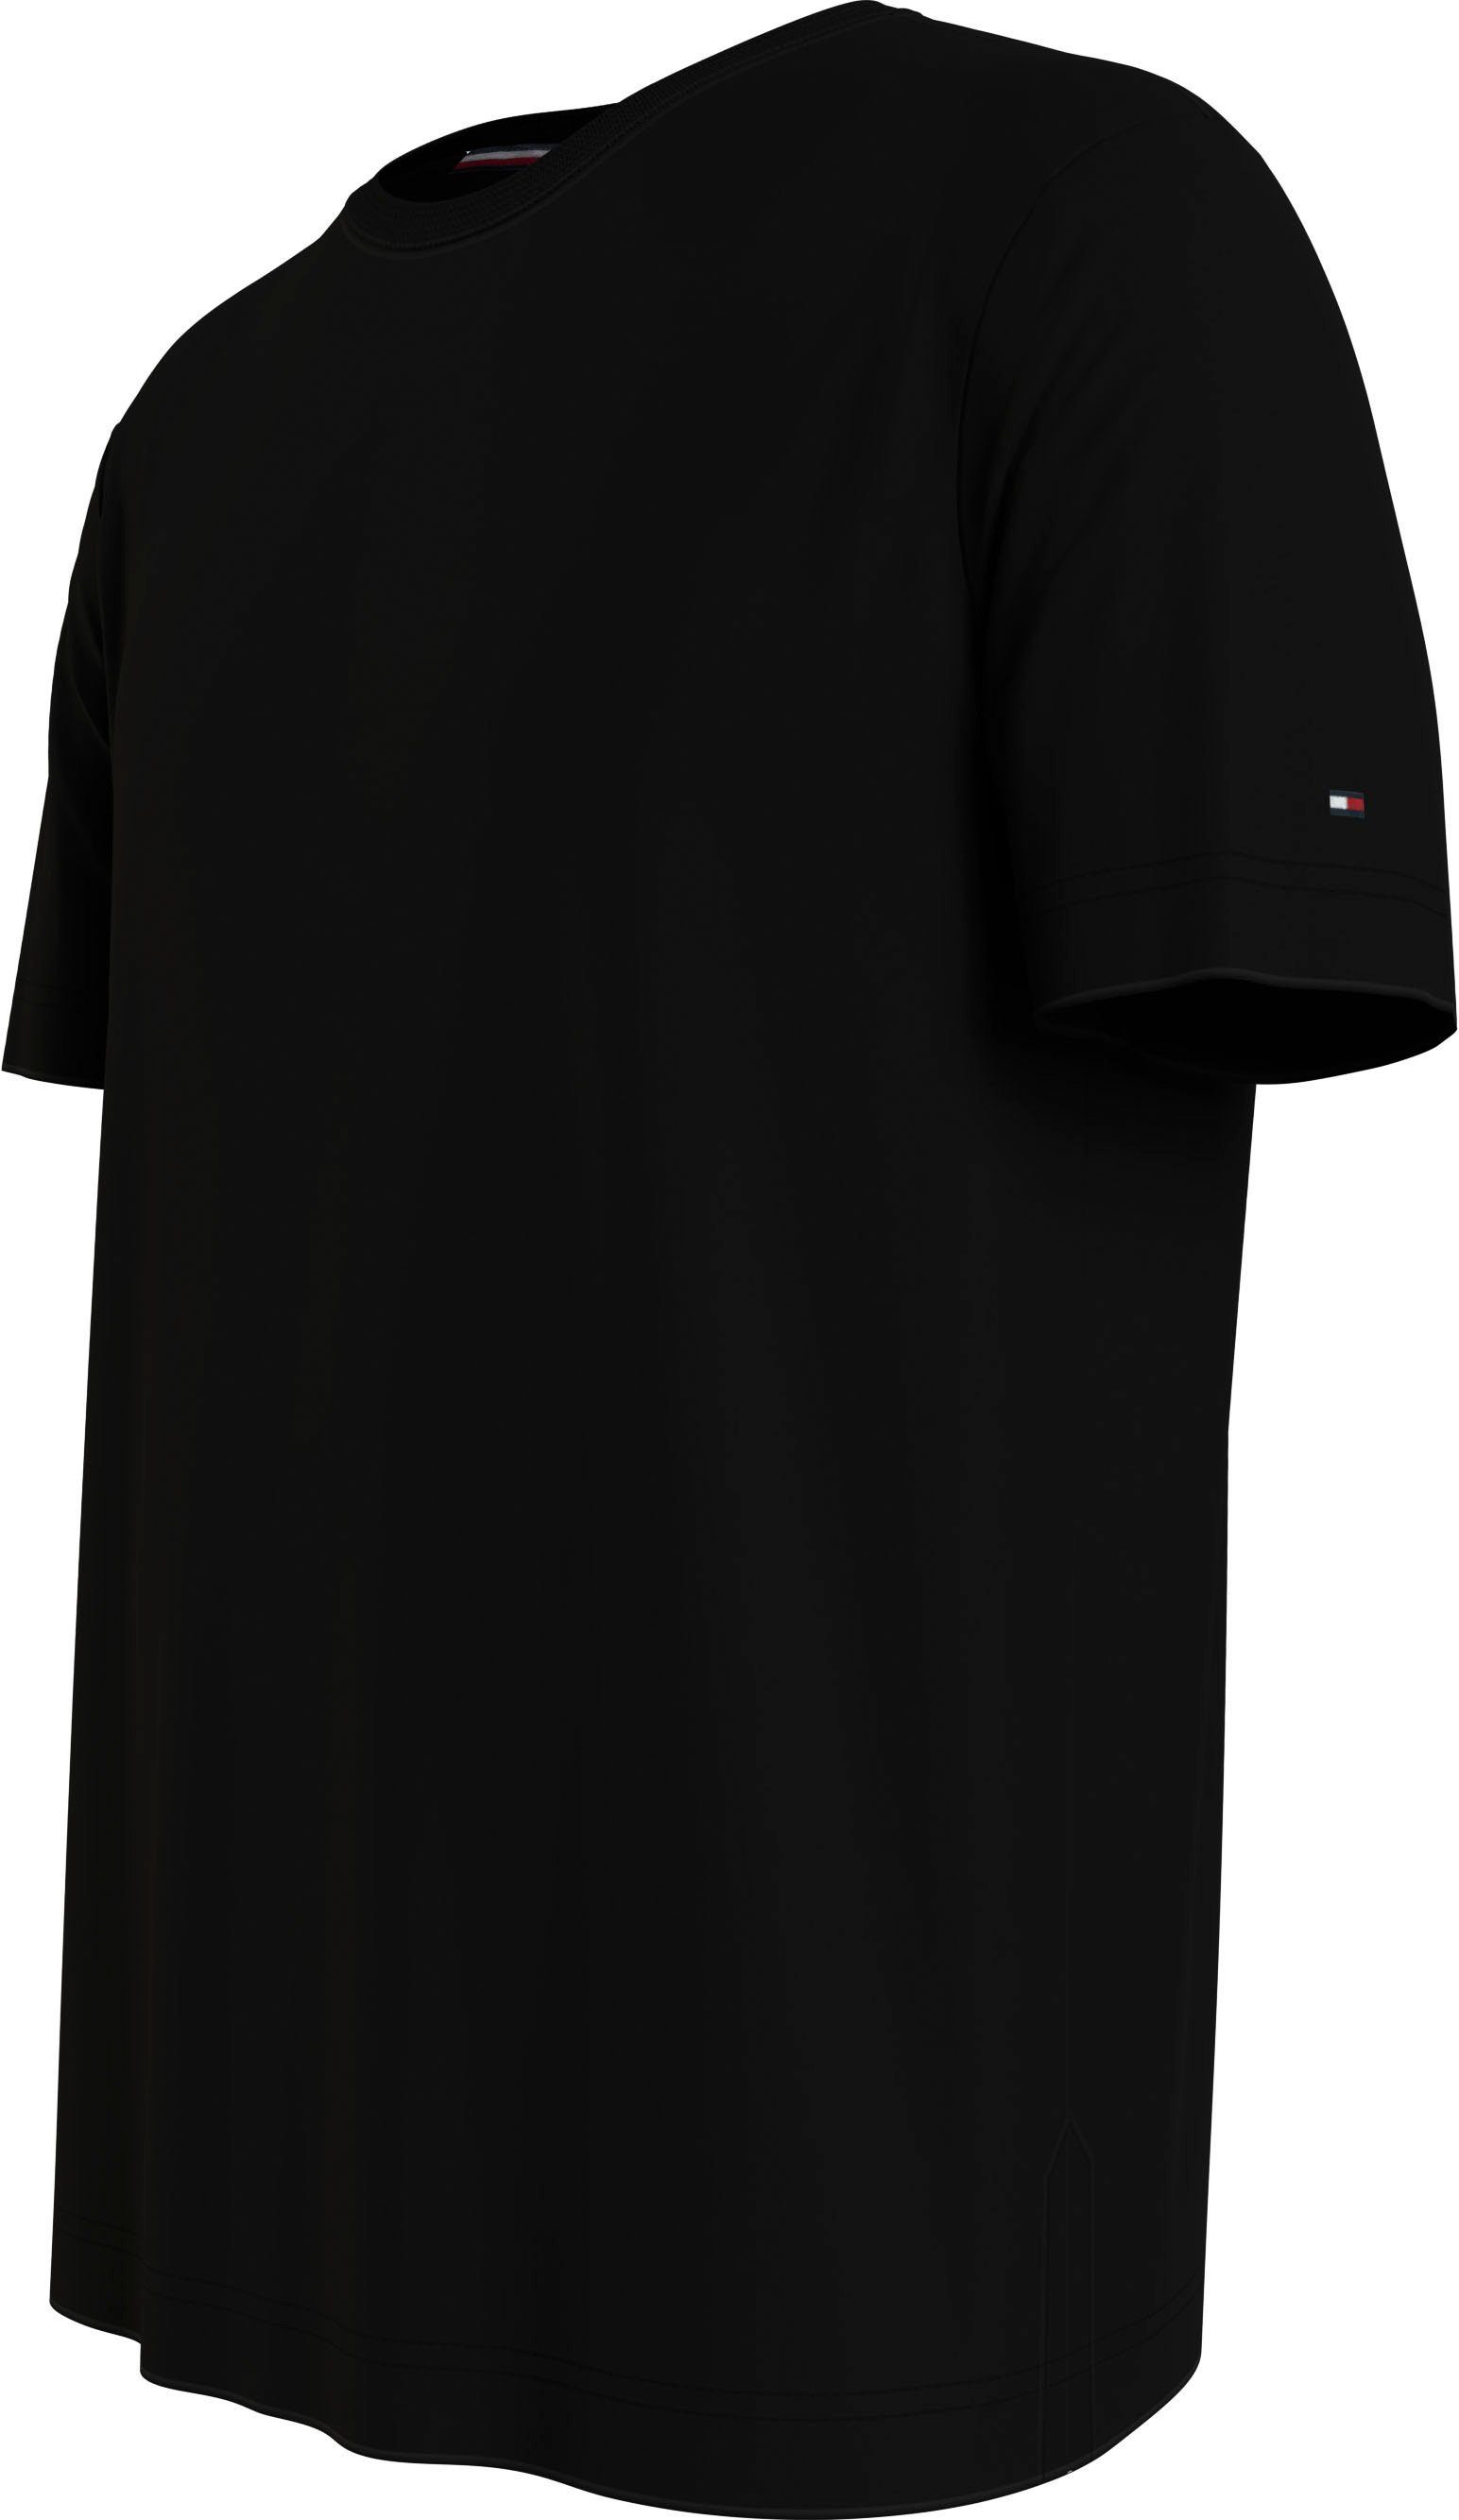 TEE ESSENTIAL T-Shirt Black klassischen MERCERIZED TAILORED Tommy Basic-Look Hilfiger im DC